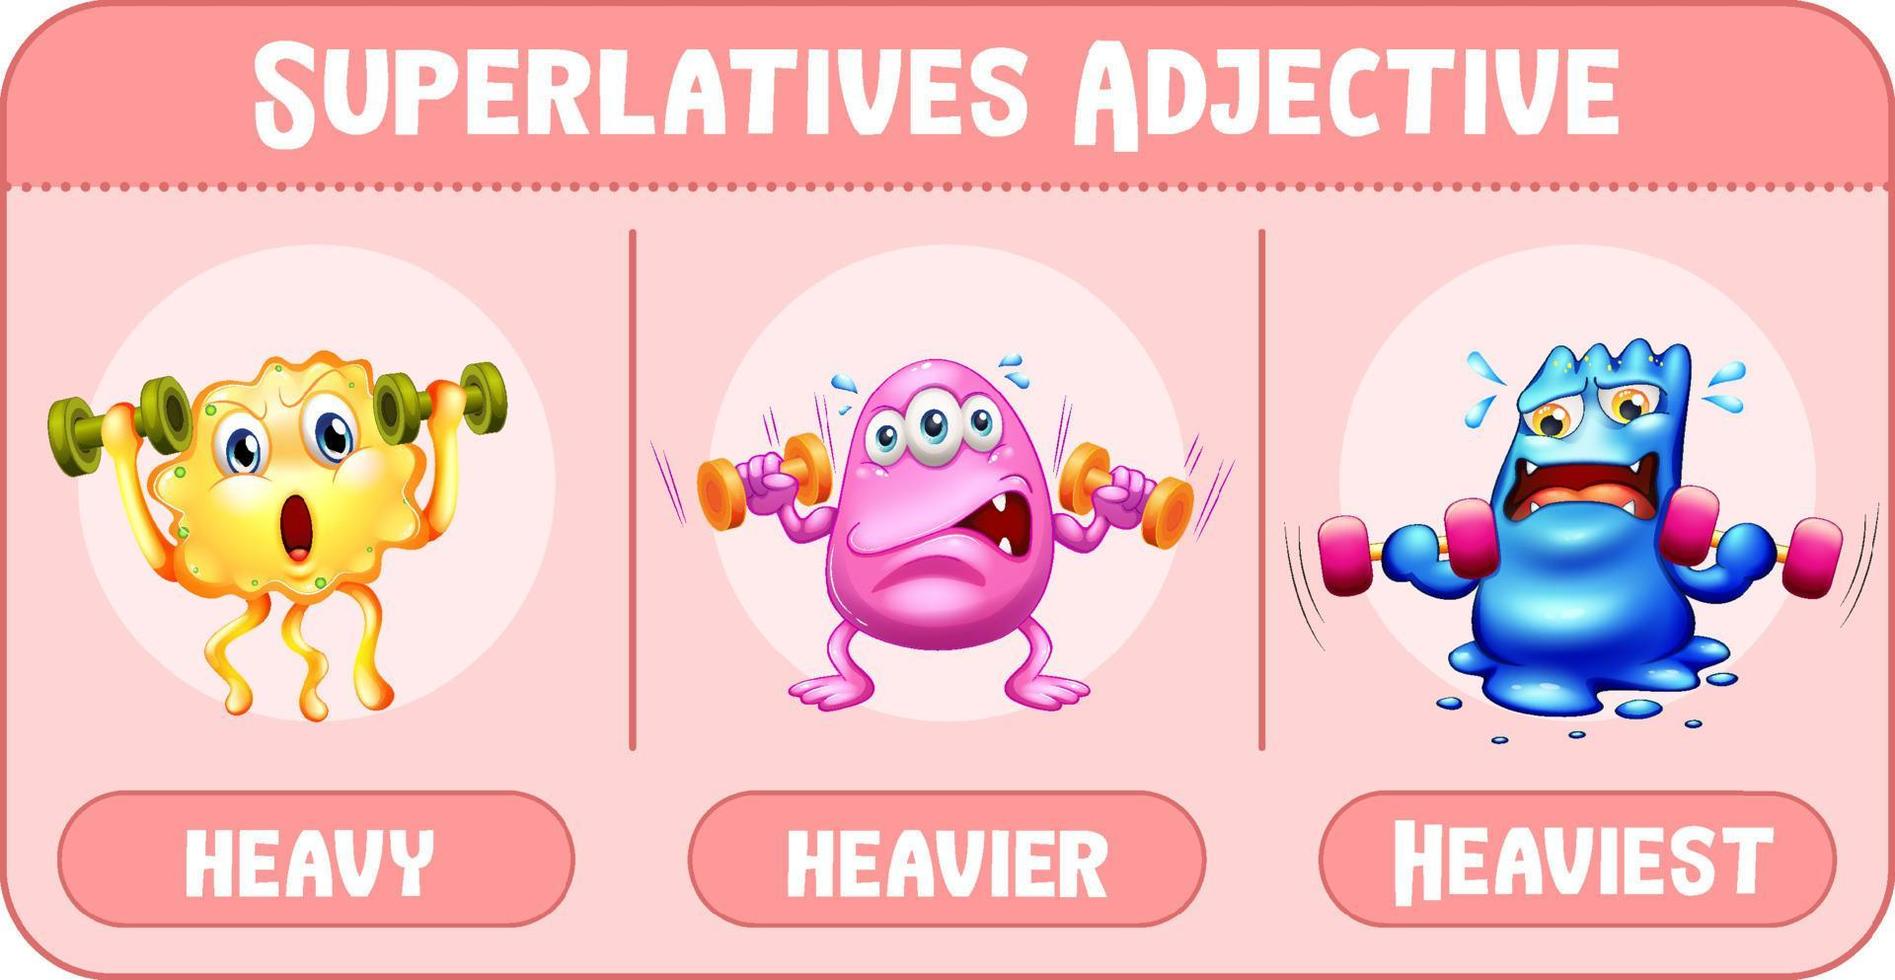 Superlatives Adjective for word heavy vector